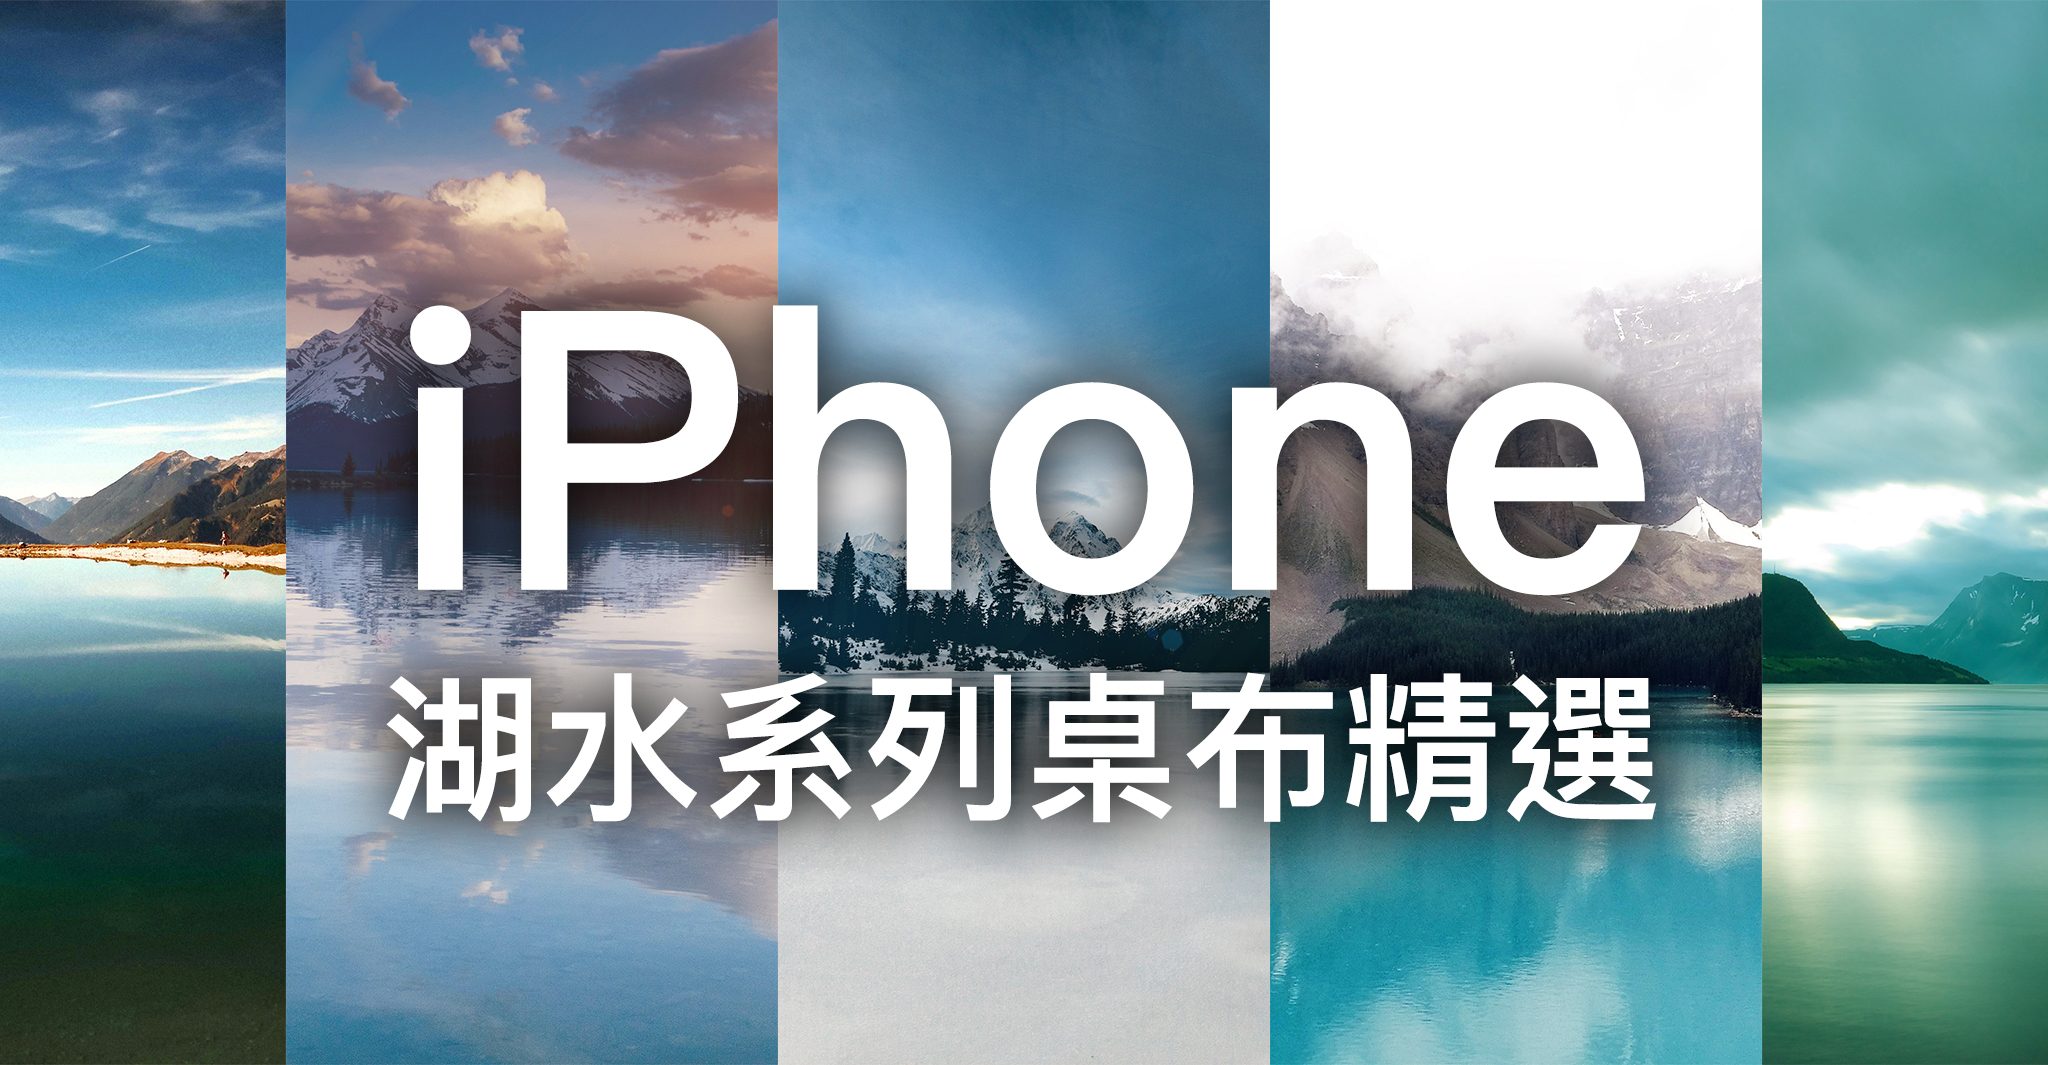 Iphone 桌布下載 精選 張湖水系列iphone 桌布 蘋果仁 果仁iphone Ios 好物推薦科技媒體